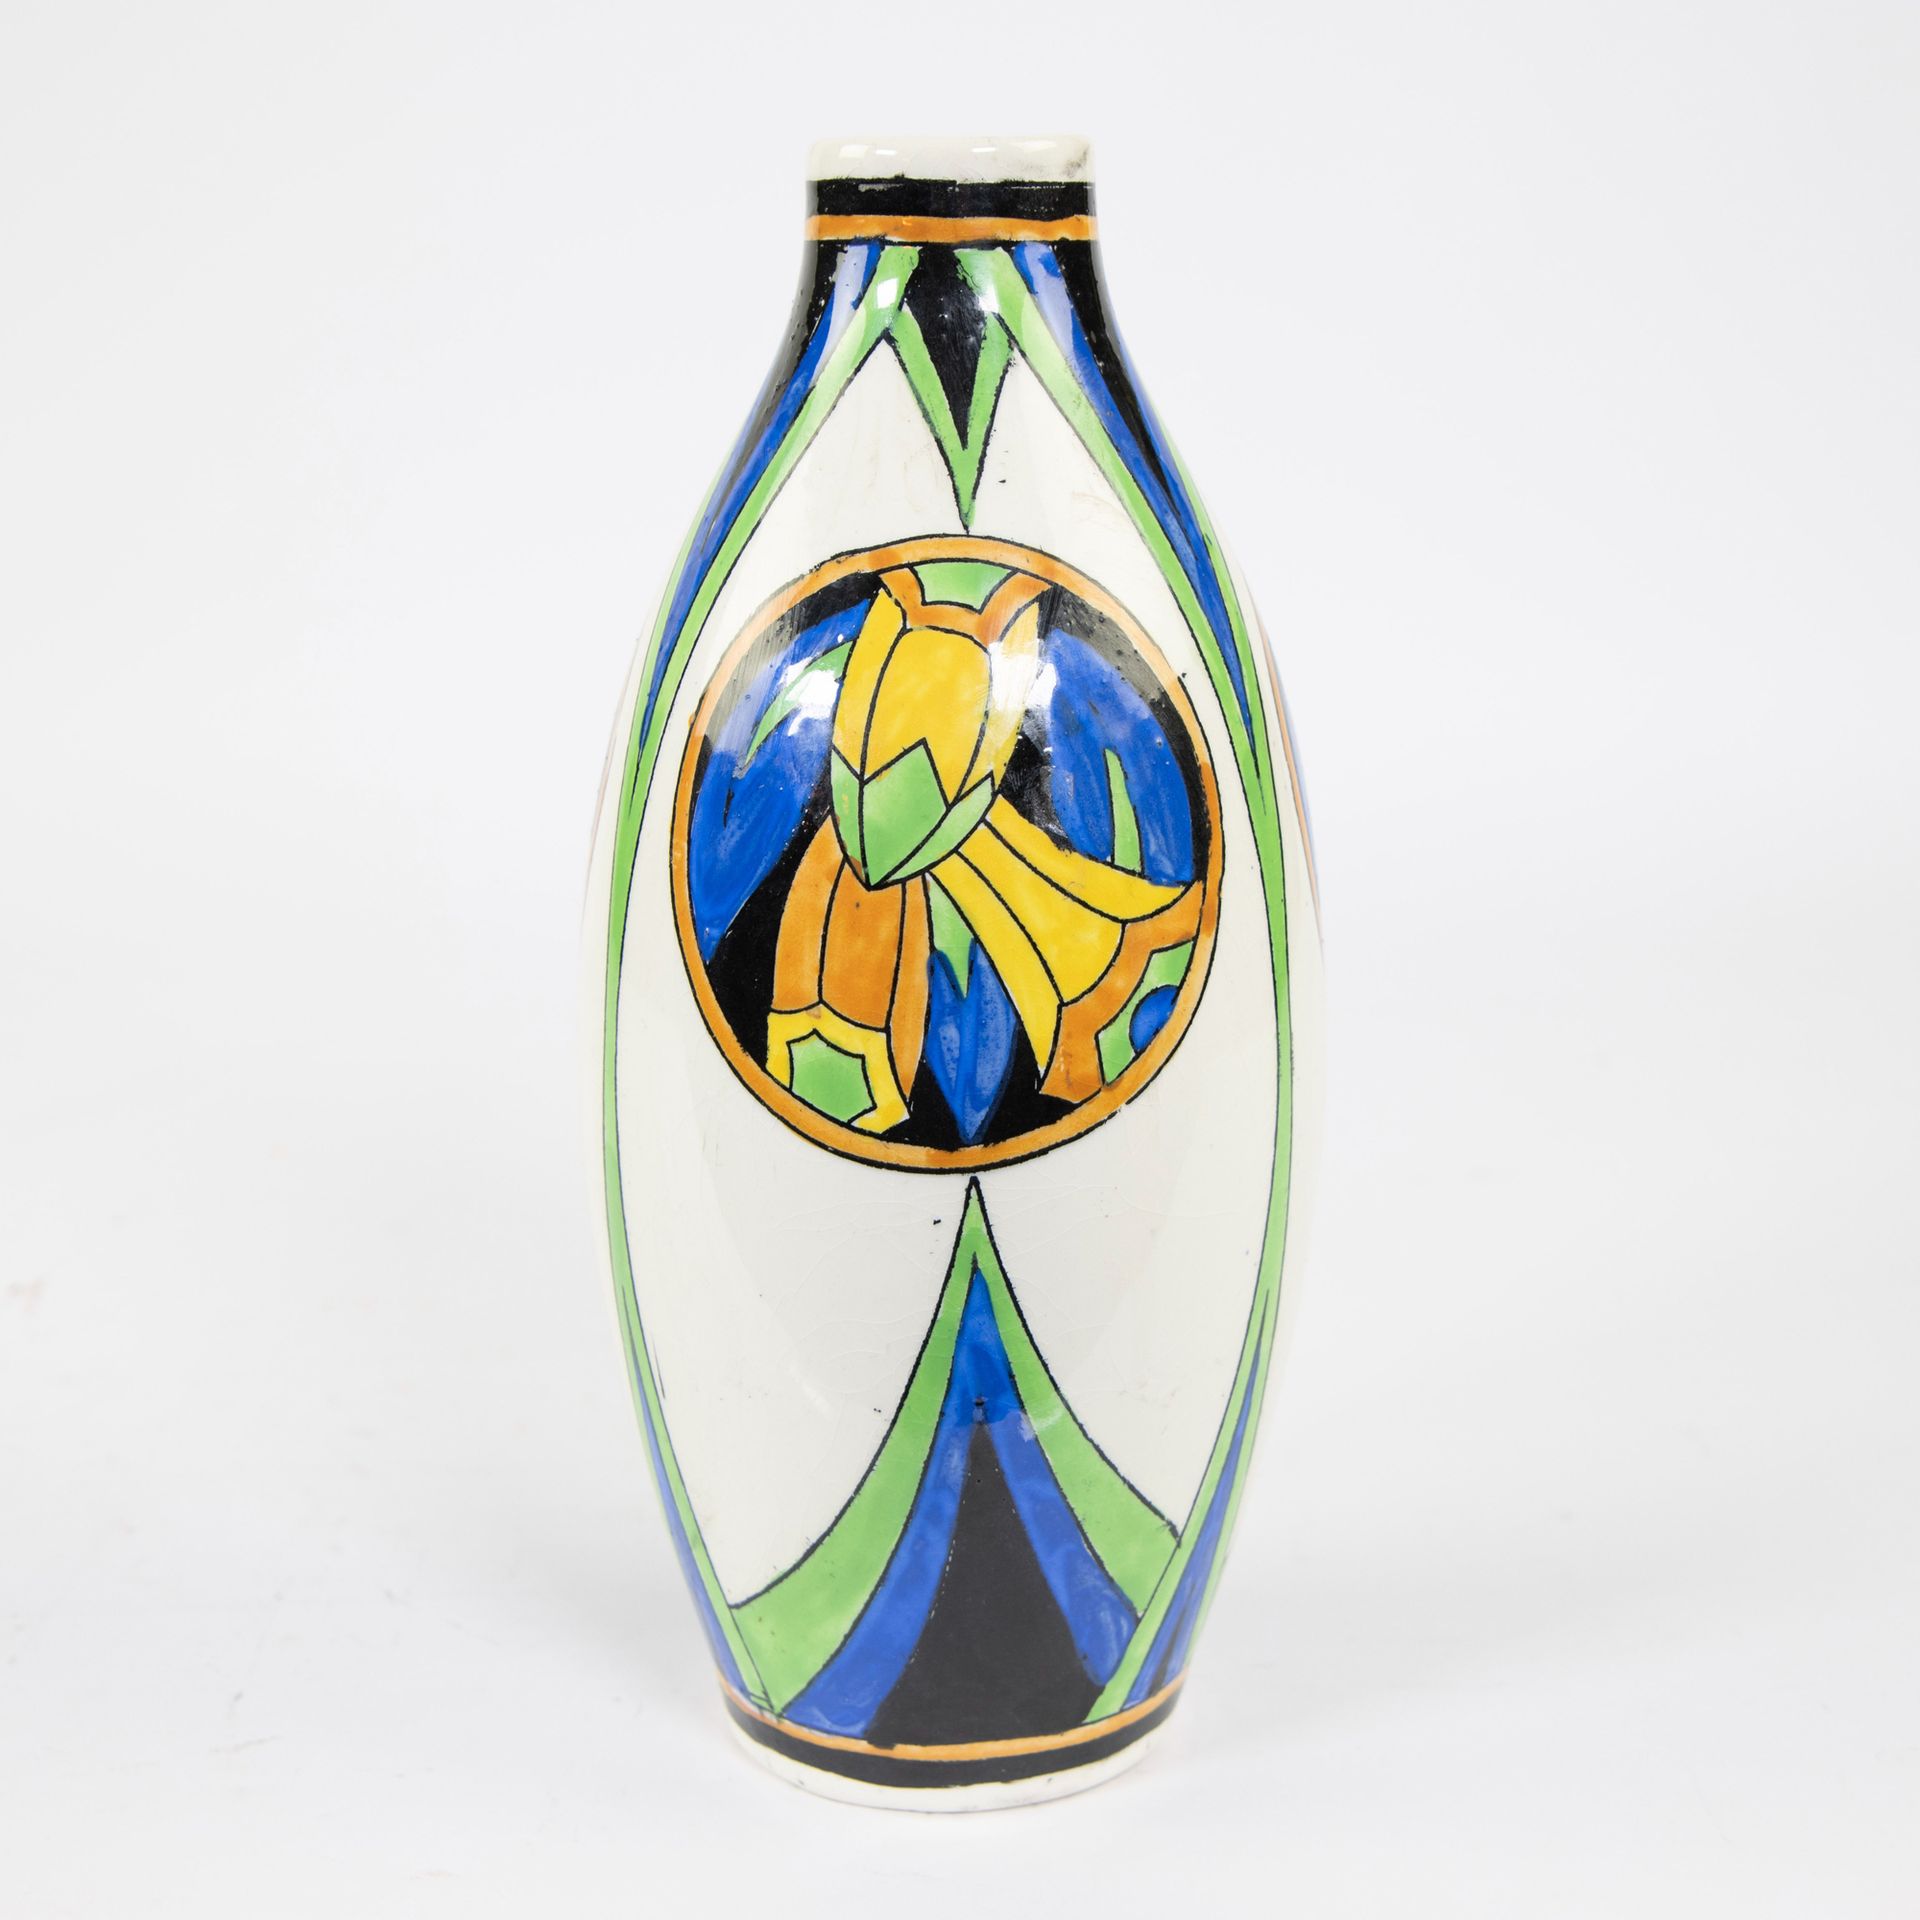 Null 查尔斯-卡托装饰艺术花瓶Boch decor 1113, 1930年代
查尔斯-卡托装饰艺术花瓶 Boch decor 1113, 30年代
高26.&hellip;